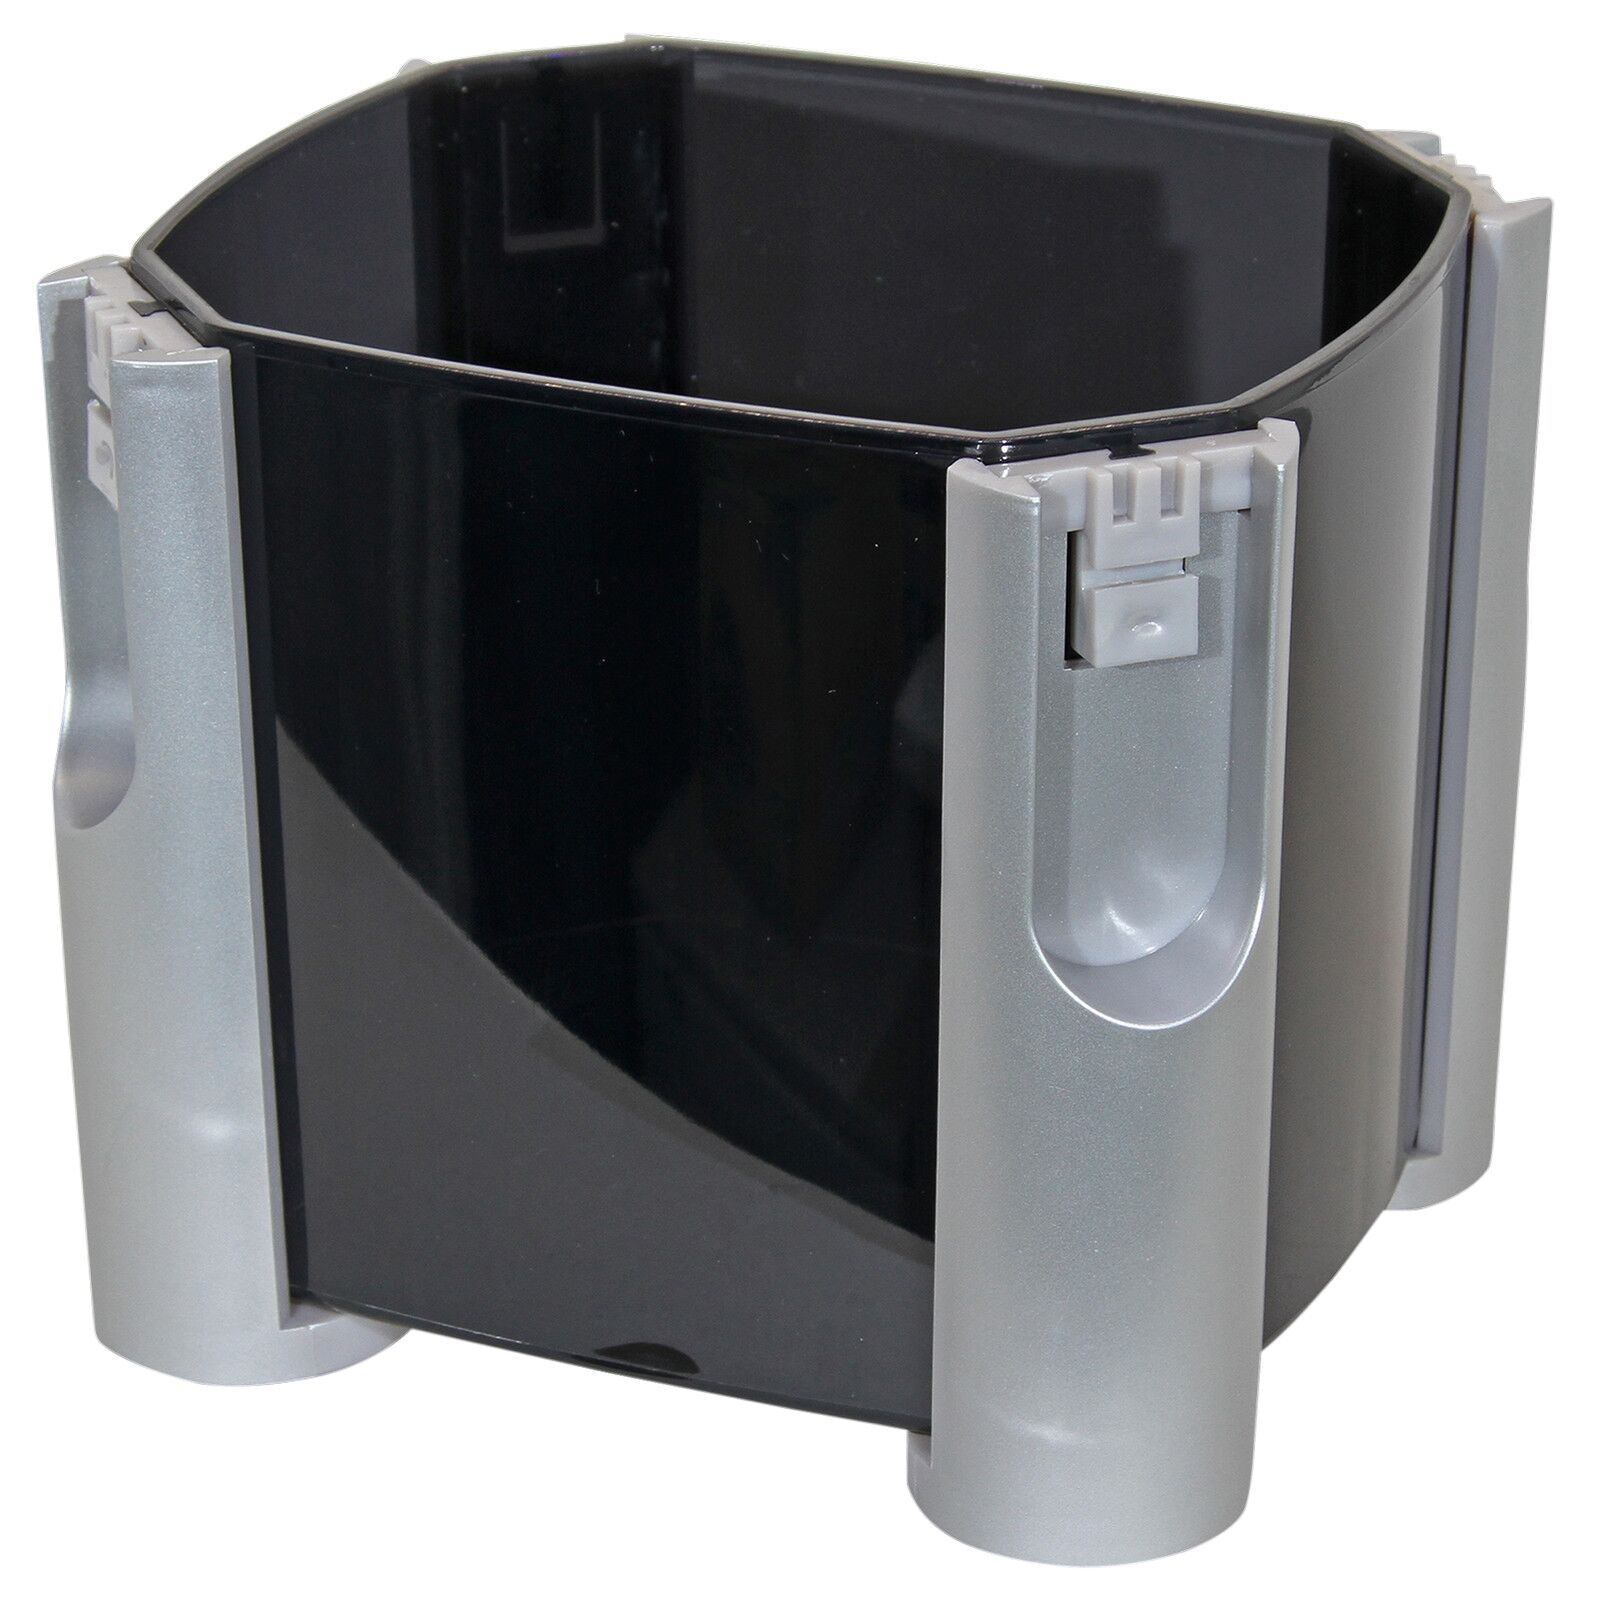 JBL - CristalProfi - Filter Container